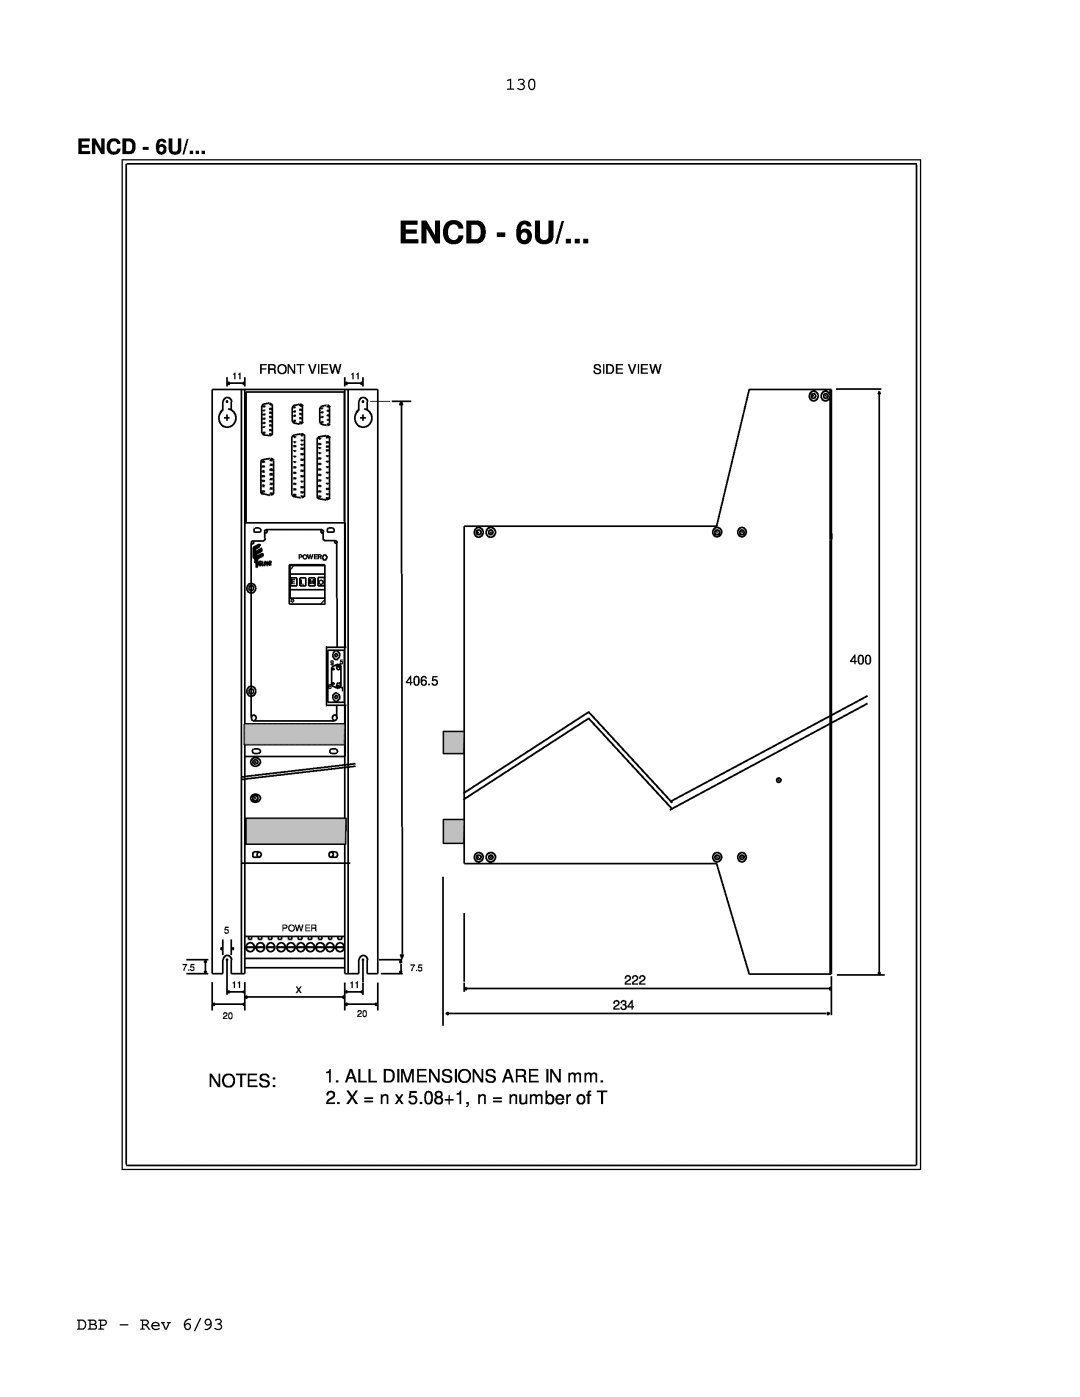 Elmo DBP SERIES manual ENCD - 6U, Front View, Side View, 406.5 